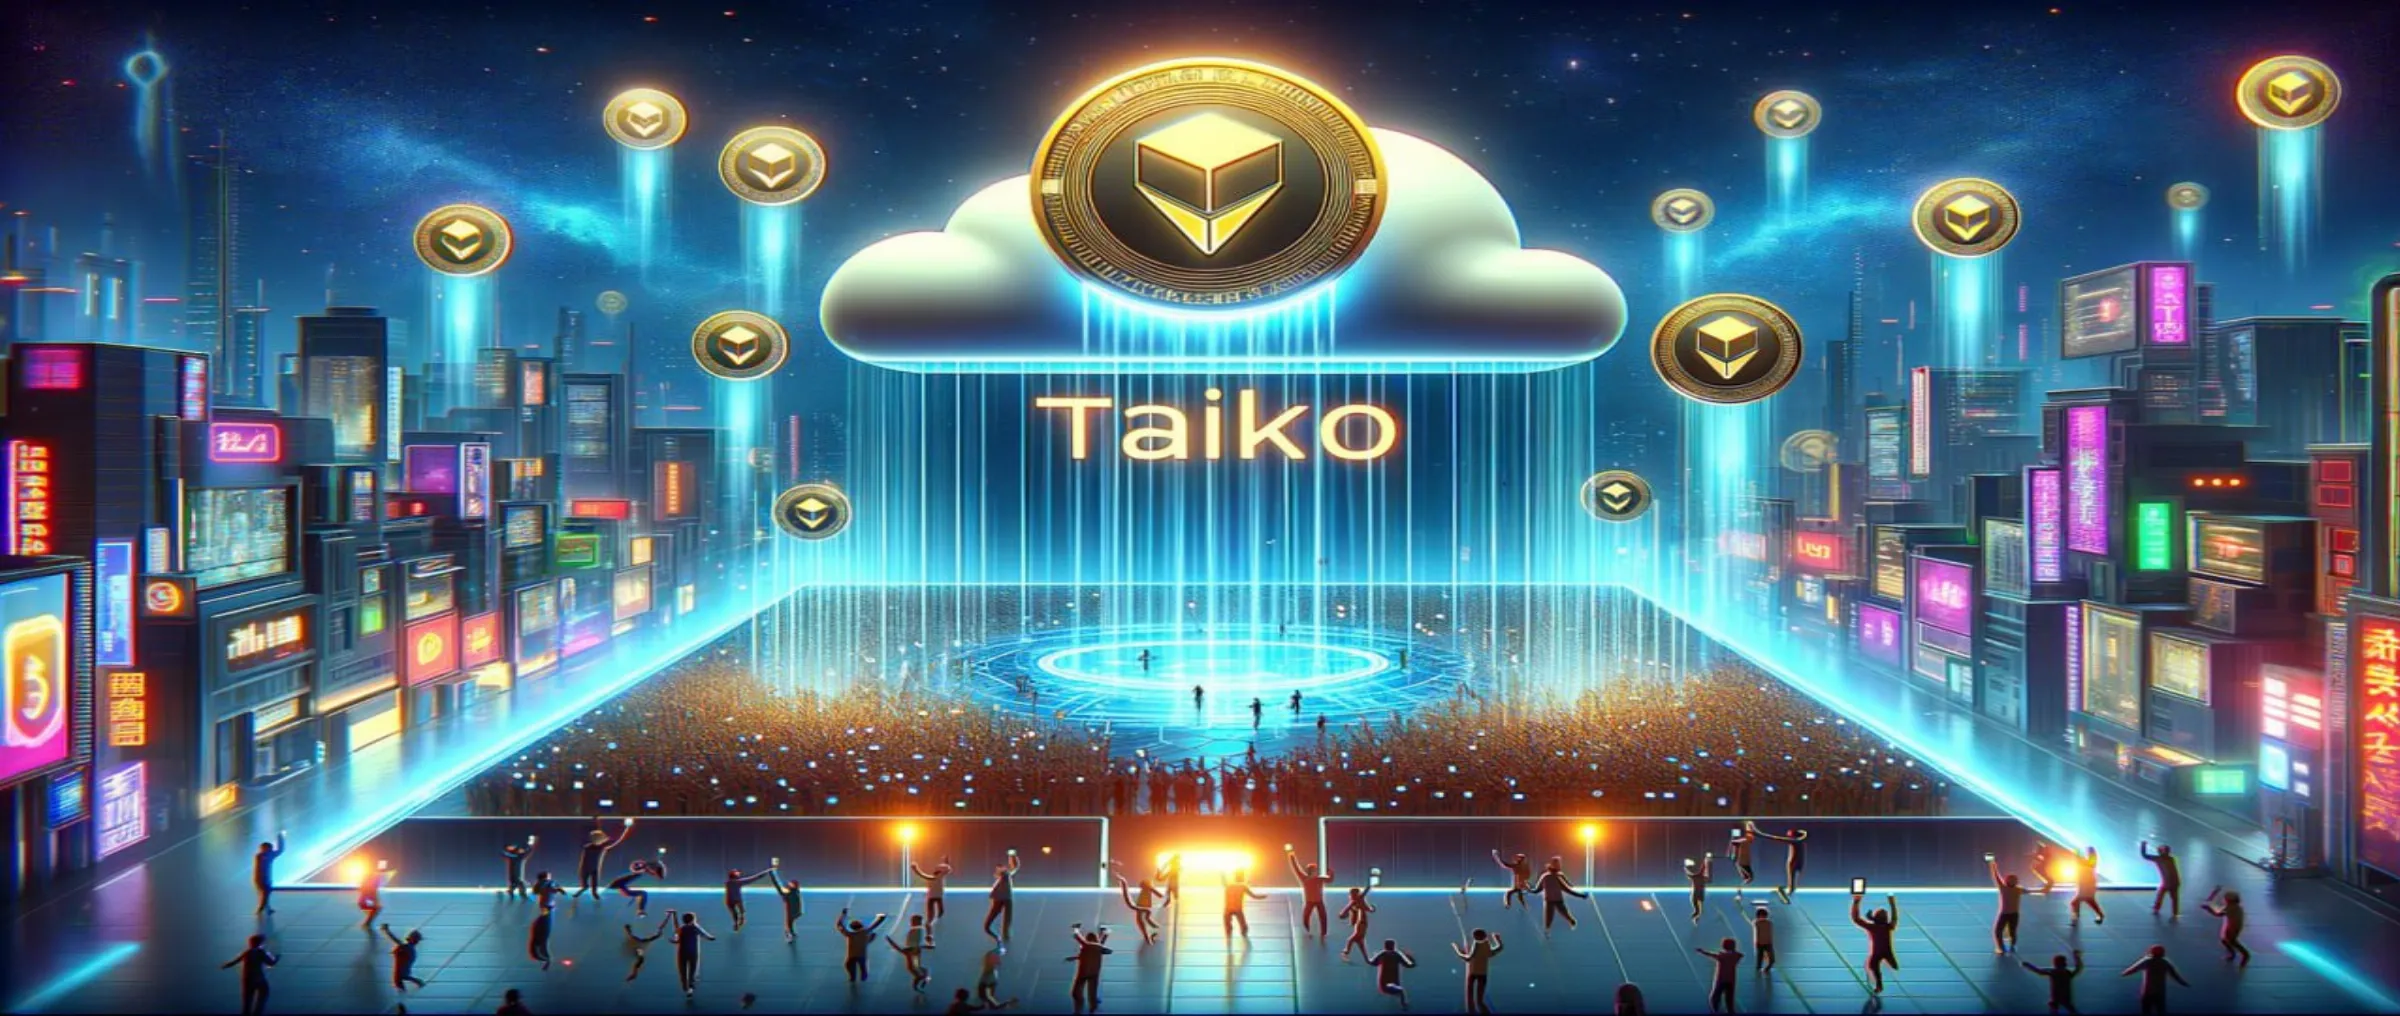 Проект Taiko объявил о предстоящем аирдропе